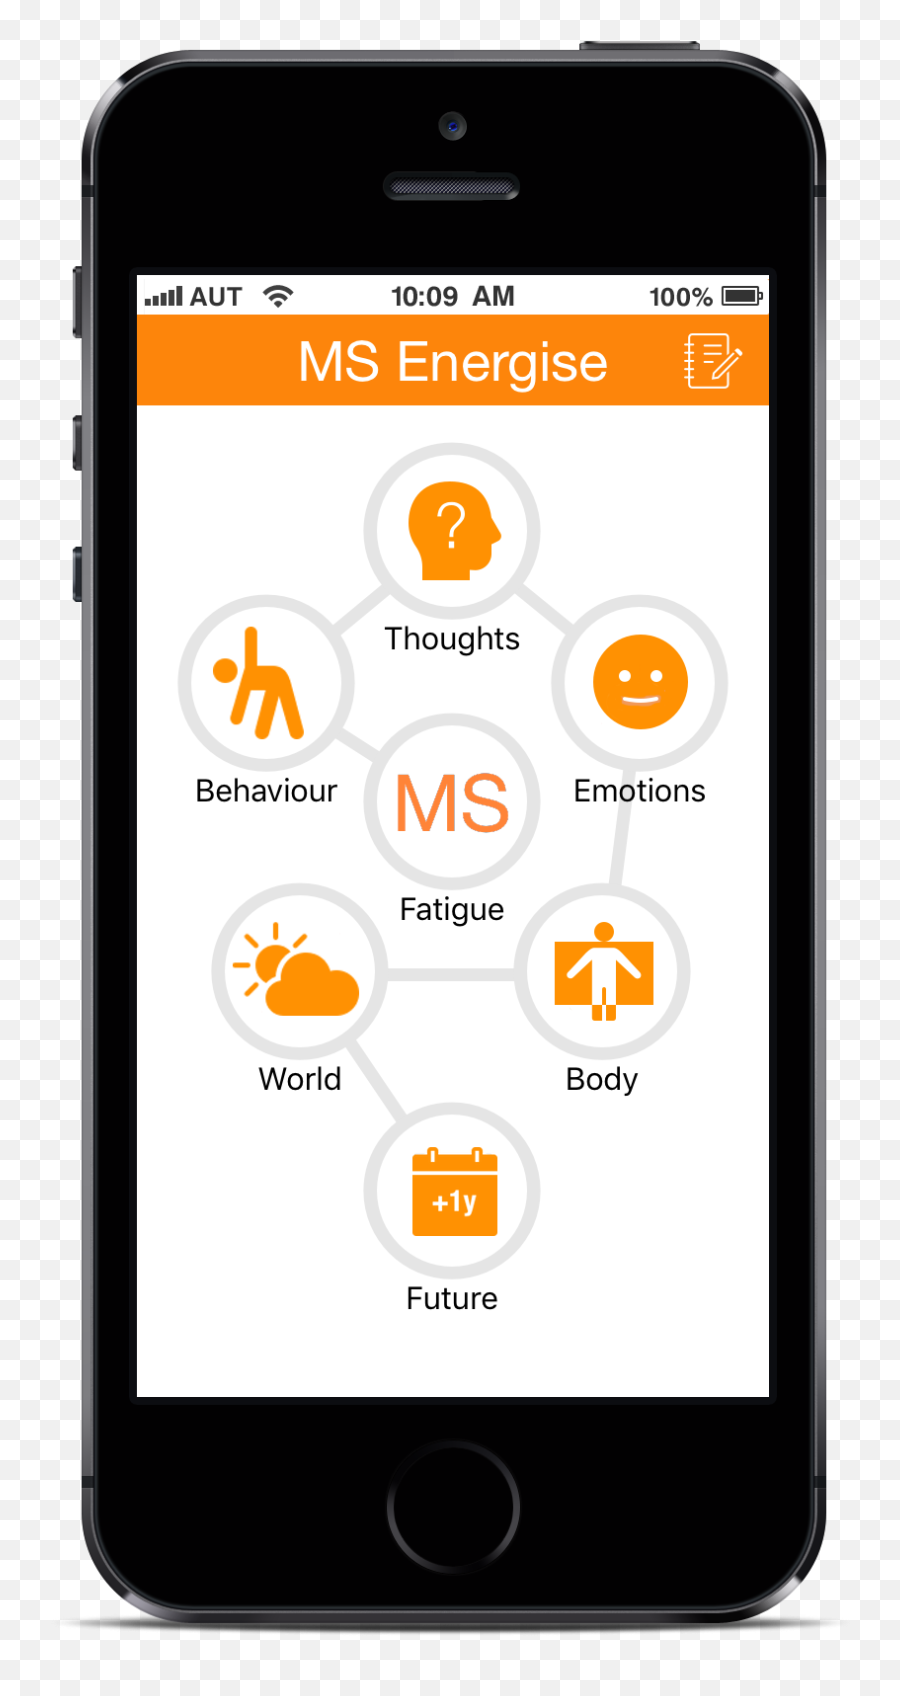 Ms Energise - Samsung Omnia Emoji,Ms And Emotions